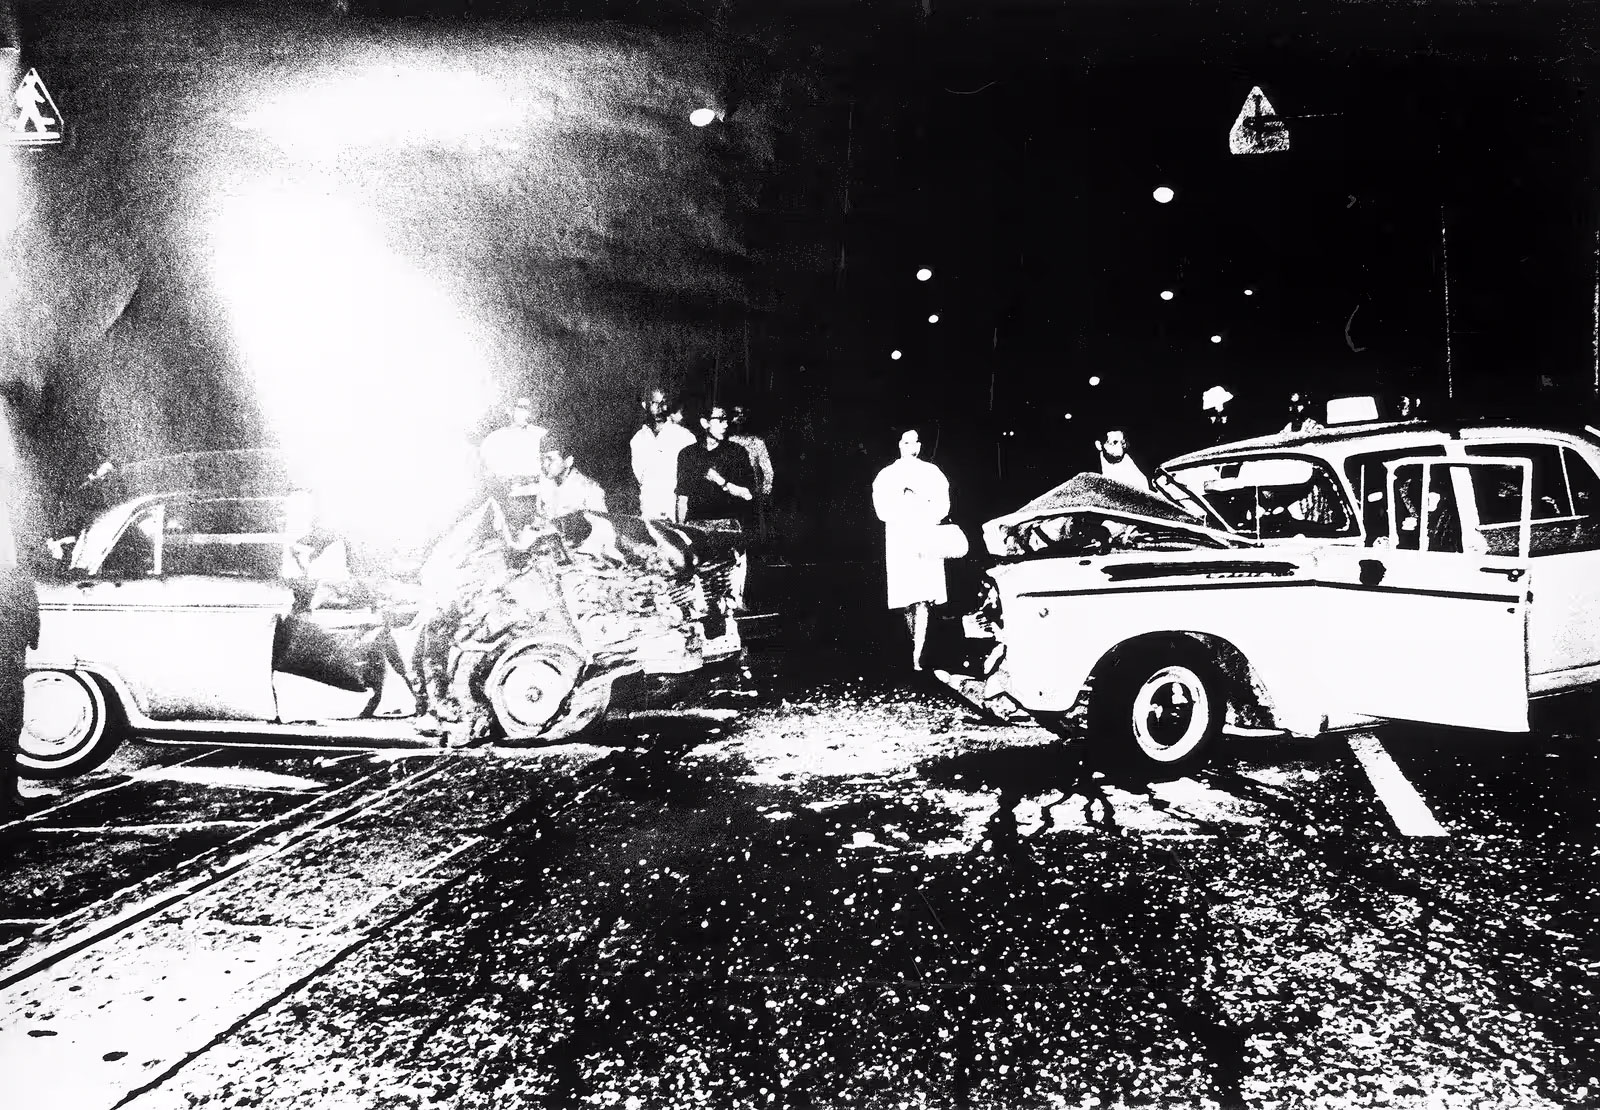 Tokyo, 1969. From Accident, Premeditated or not. Photograph: © Daido Moriyama/Daido Moriyama Photo Foundation